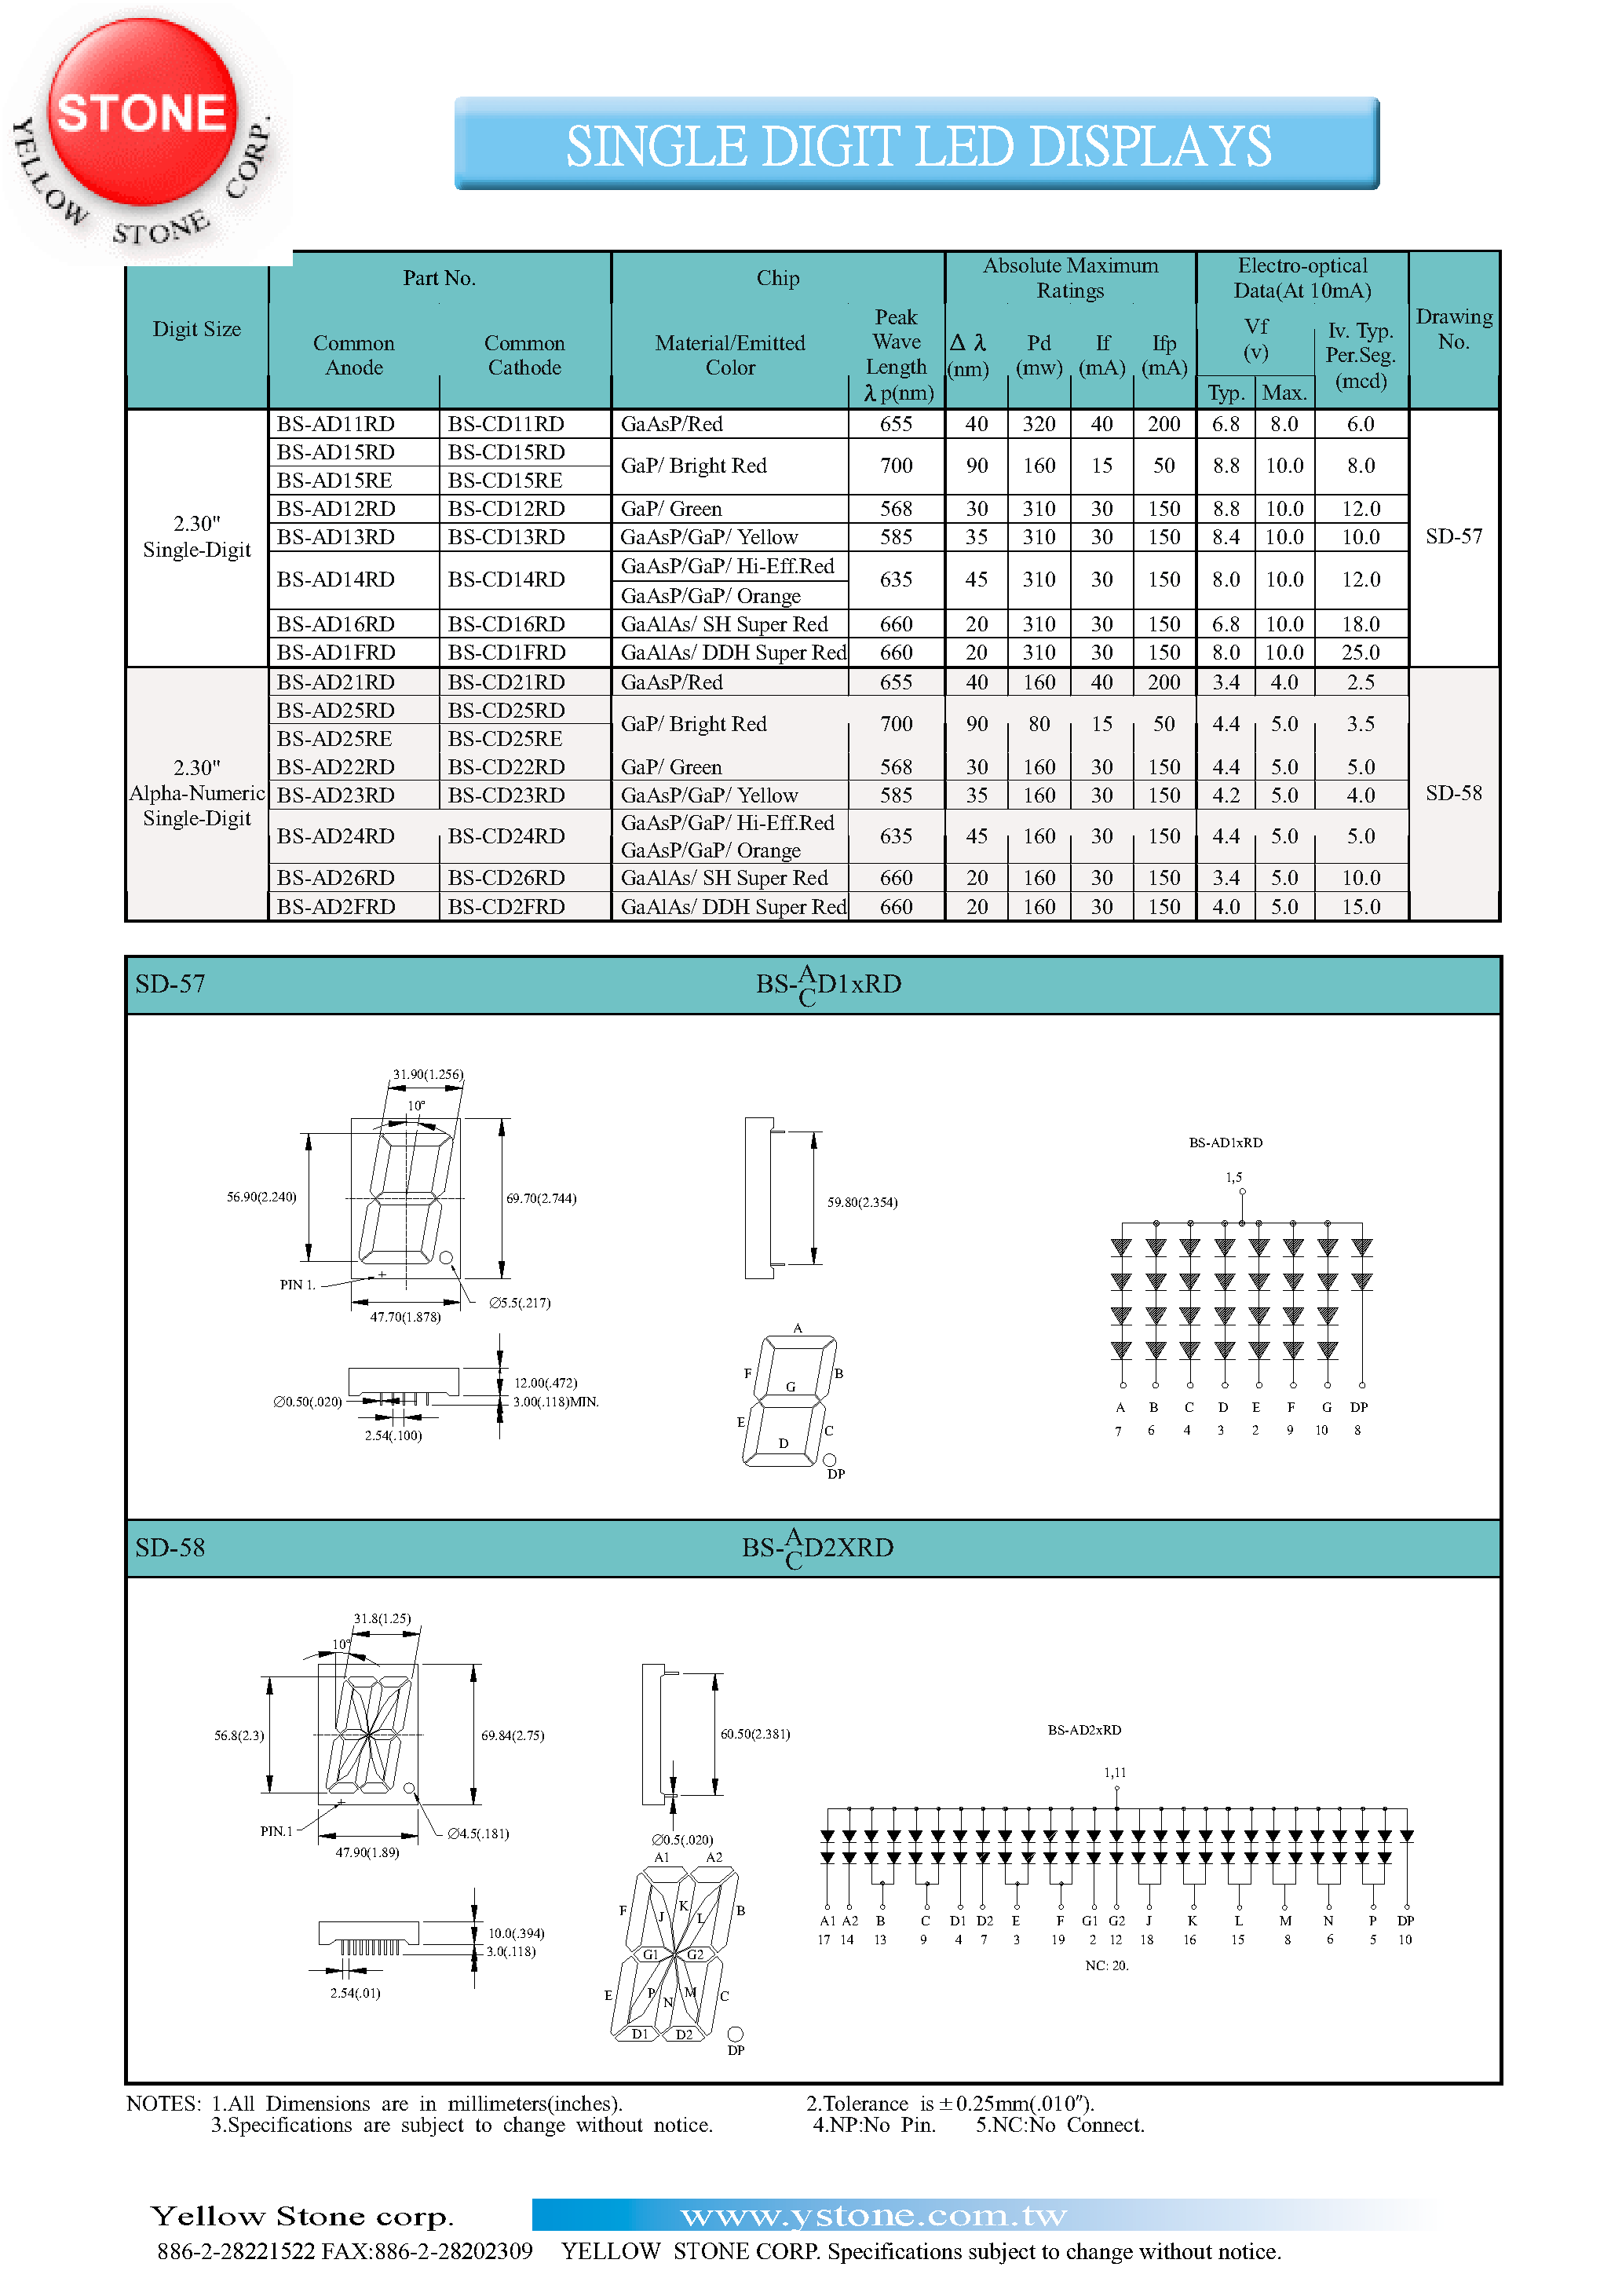 Datasheet BS-AD21RD - SINGLE DIGIT LED DISPLAYS page 1